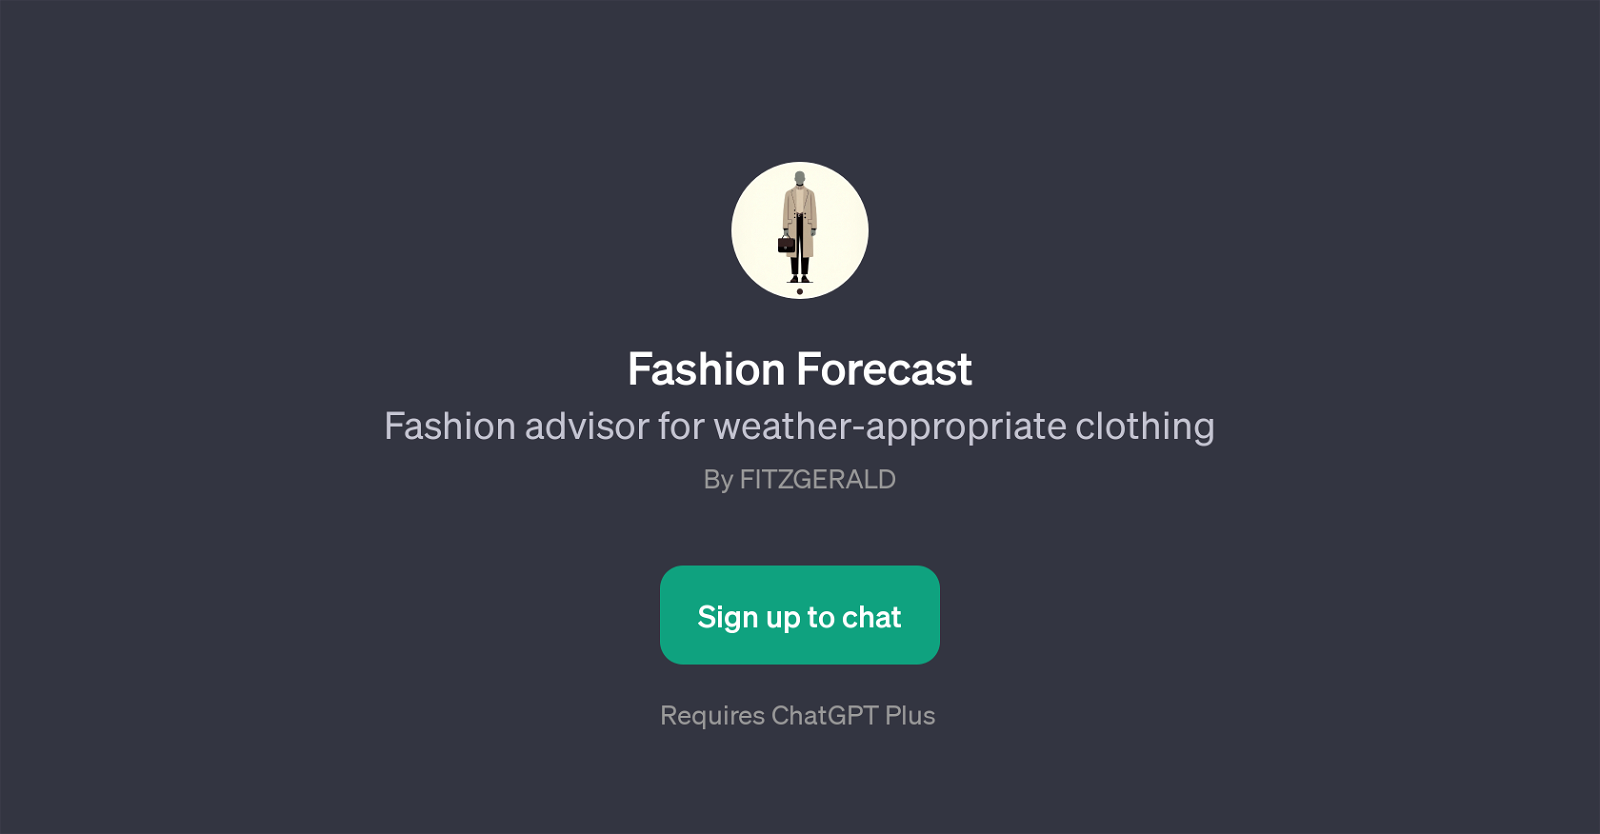 Fashion Forecast website